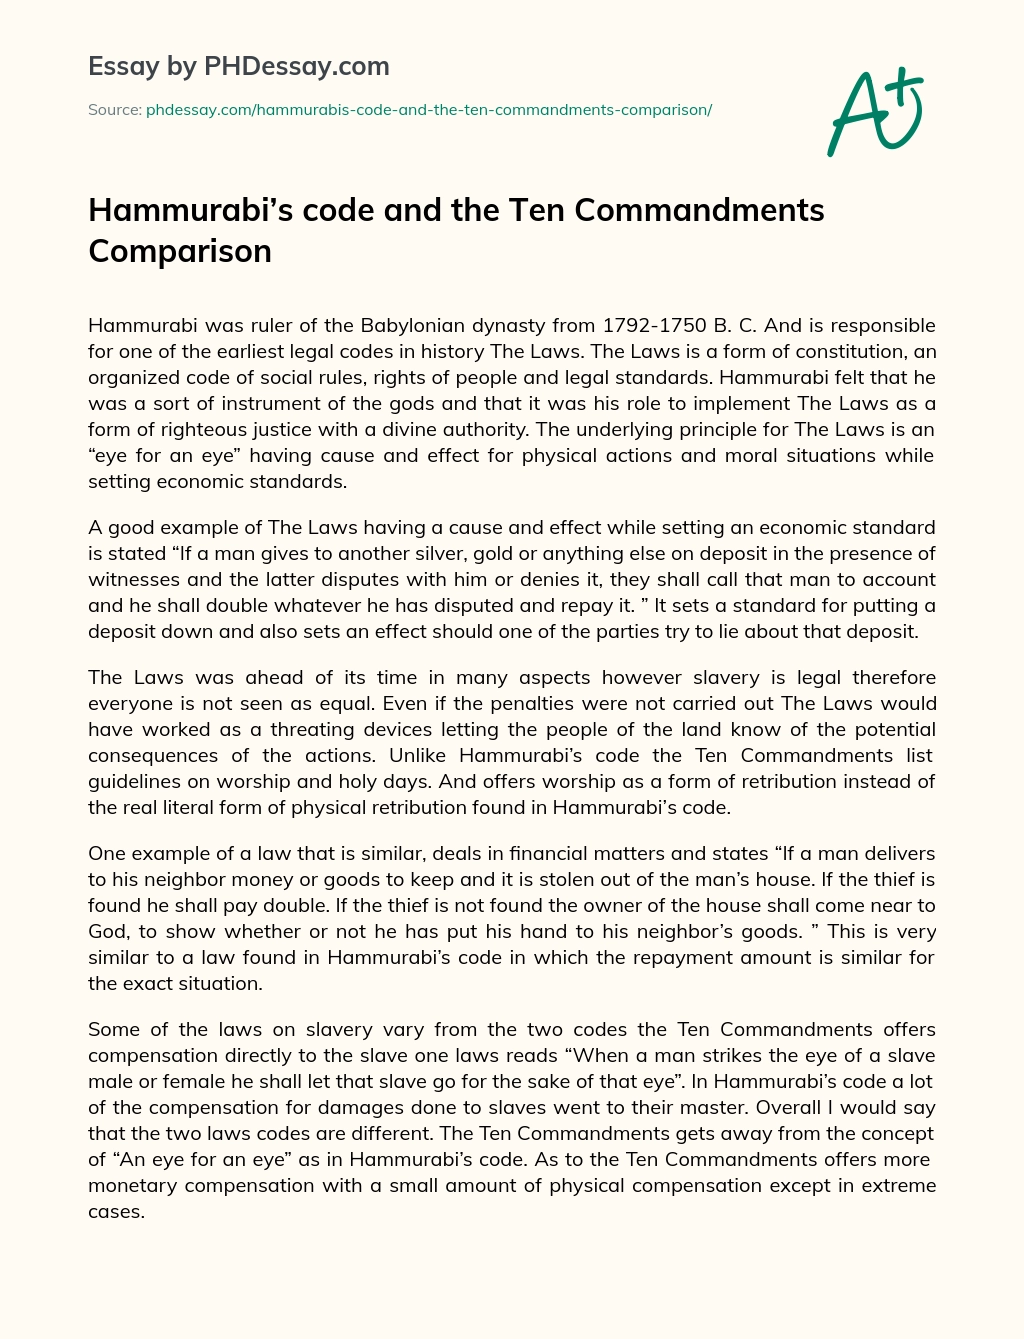 Hammurabi’s code and the Ten Commandments Comparison essay